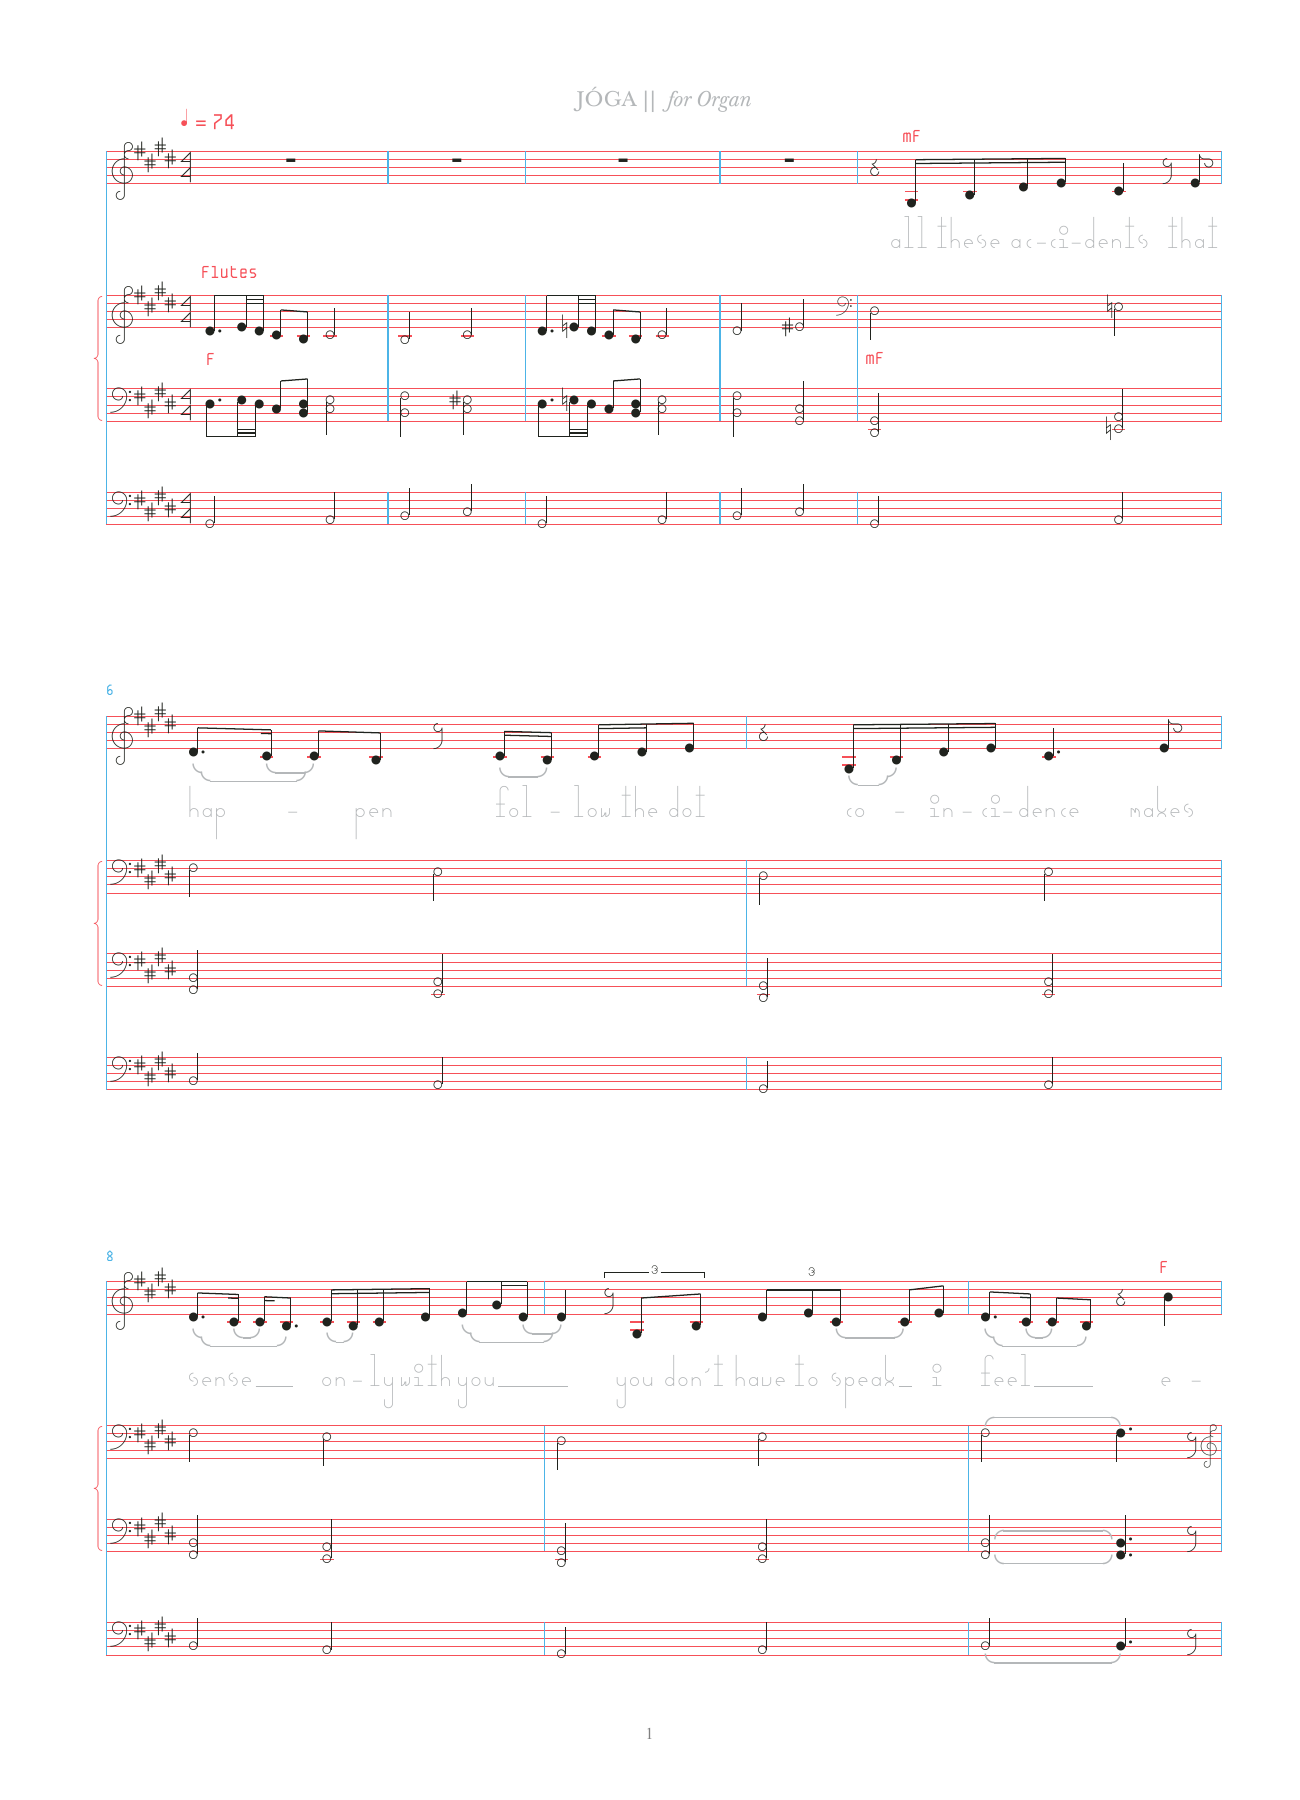 Bjork Joga sheet music notes and chords arranged for Organ